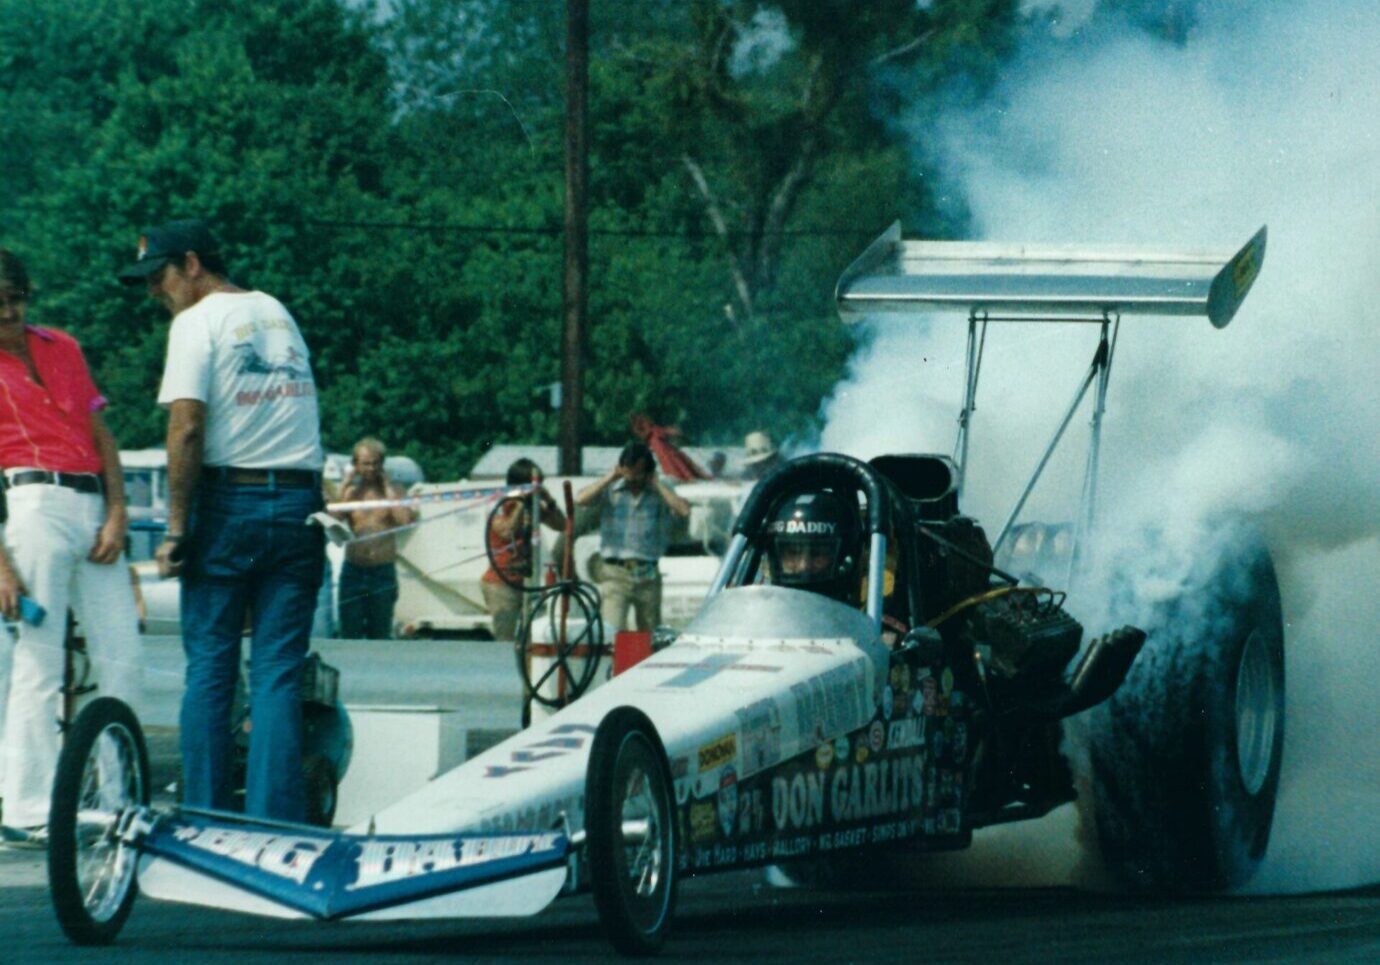 A man engaging in drag racing as he drives a smoking drag car.